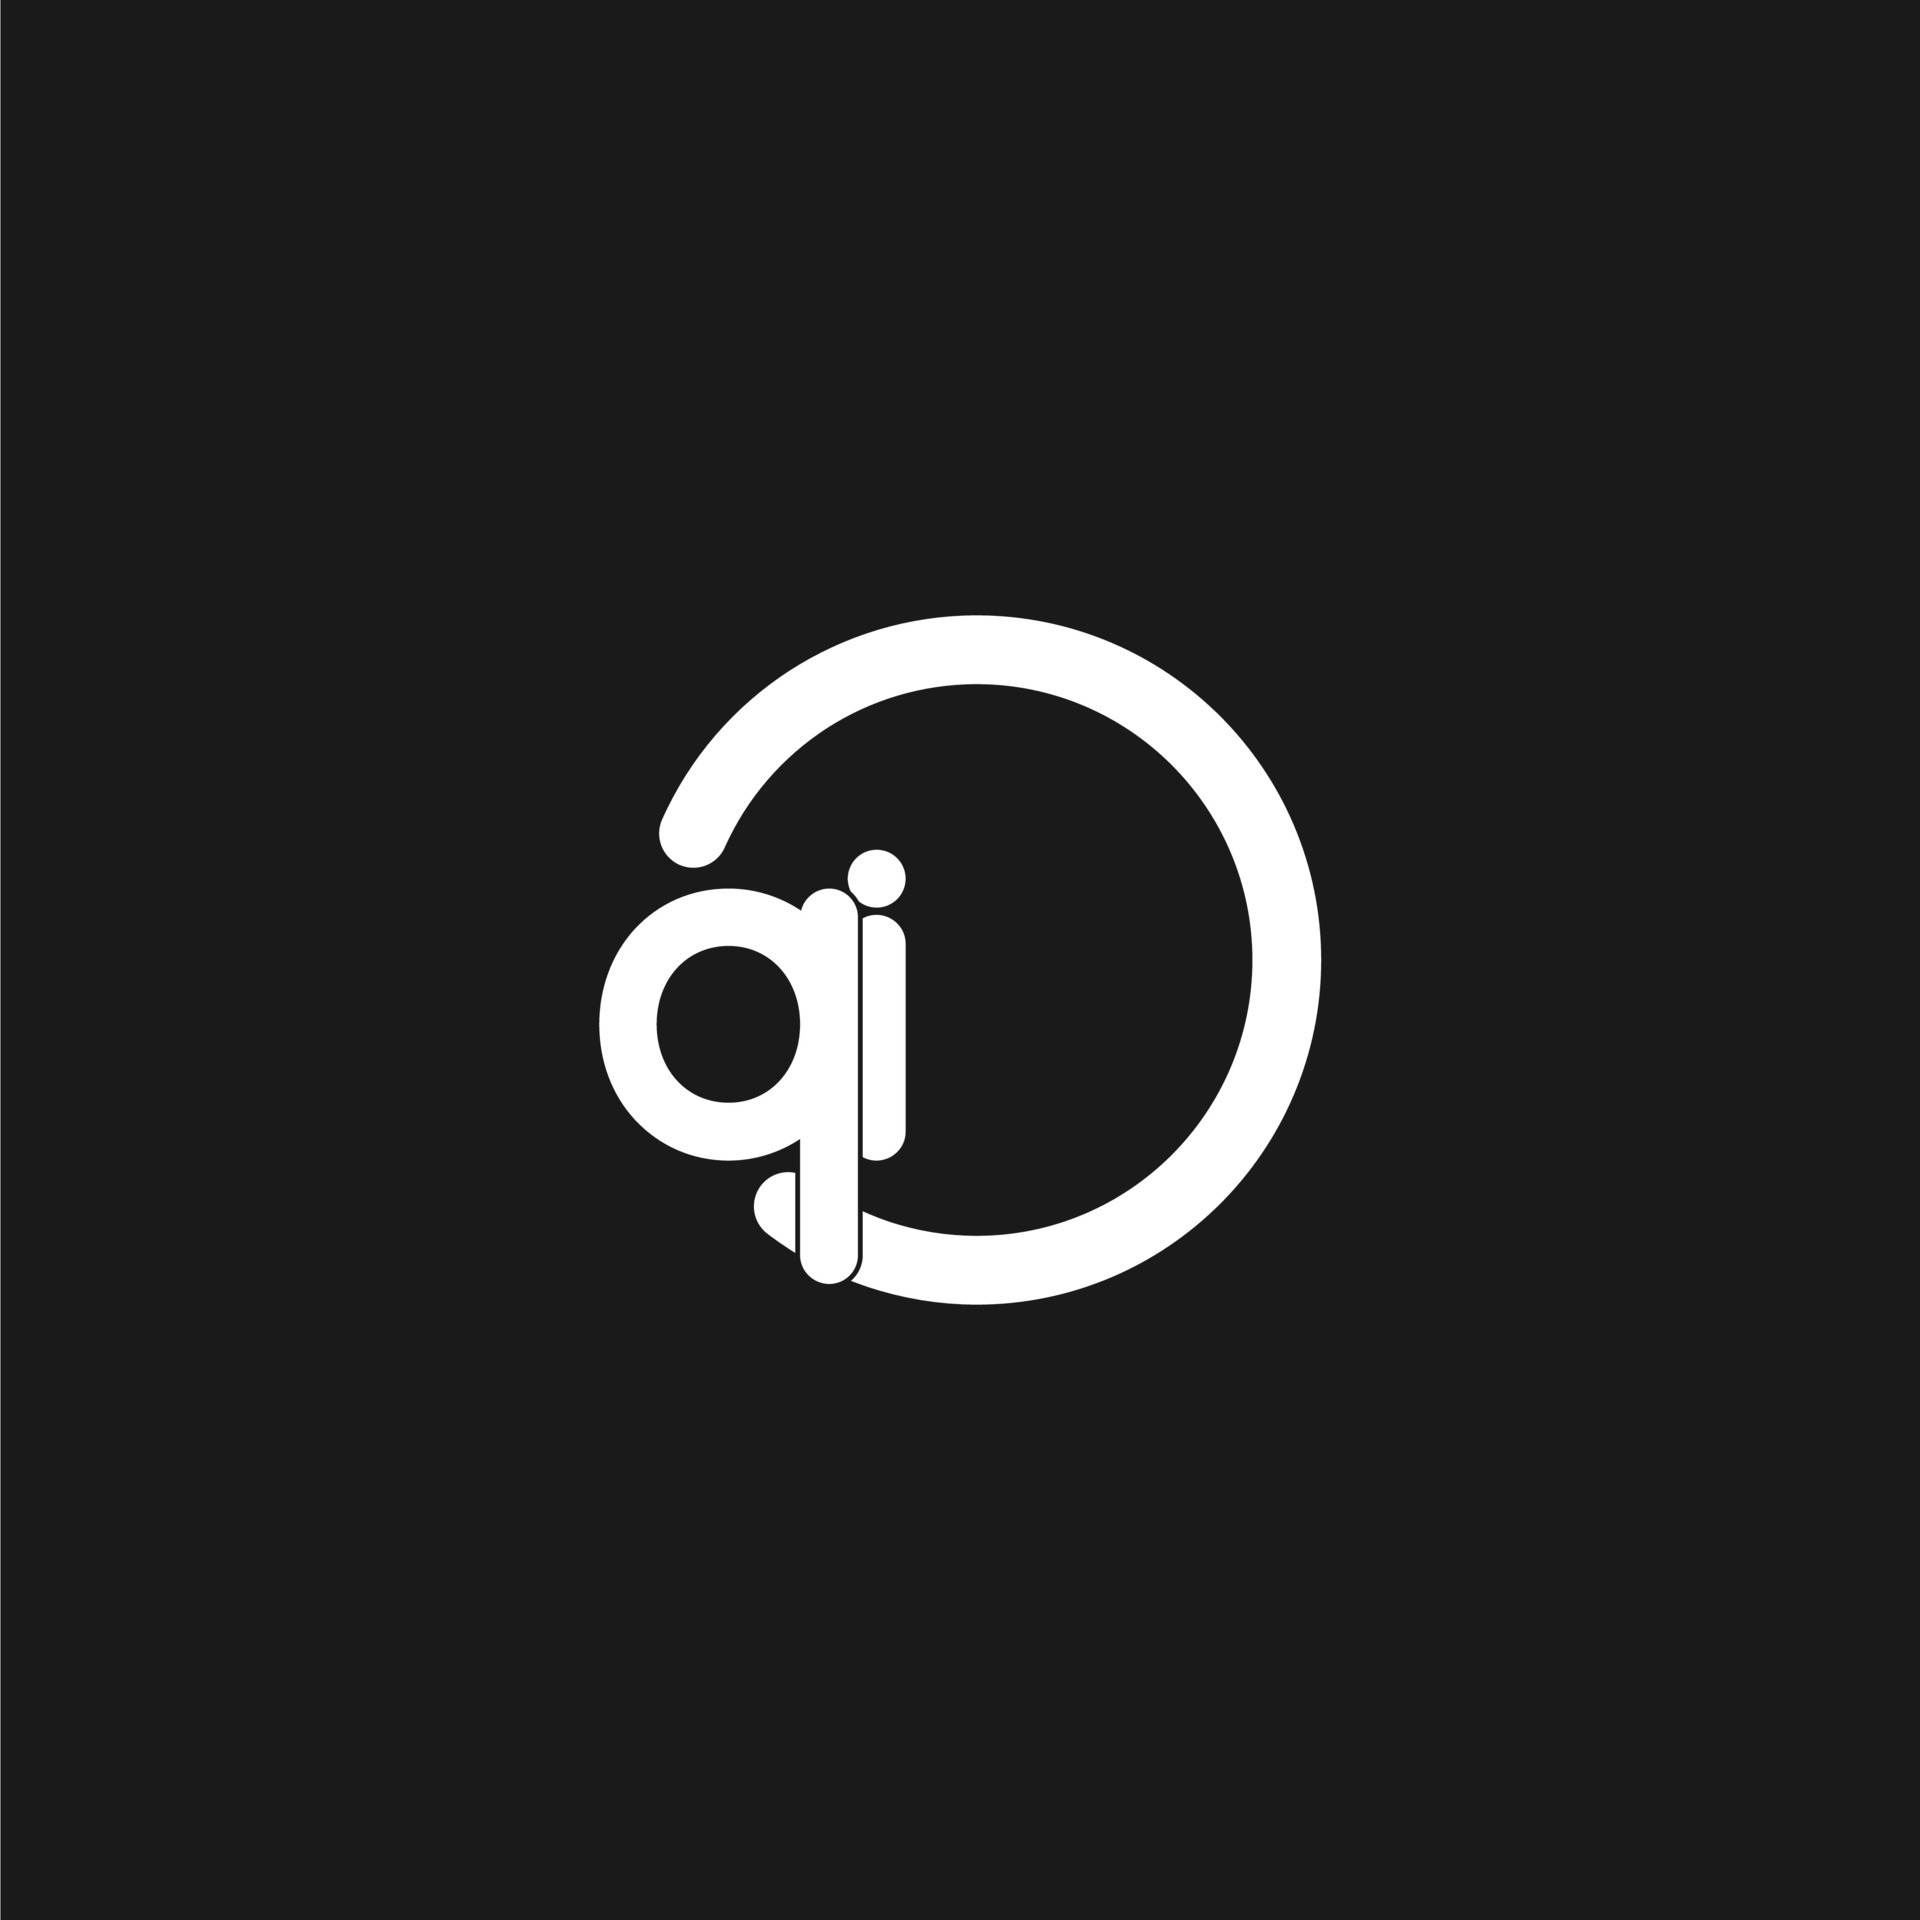 Initials QI logo monogram with simple circles lines 28267164 Vector Art ...